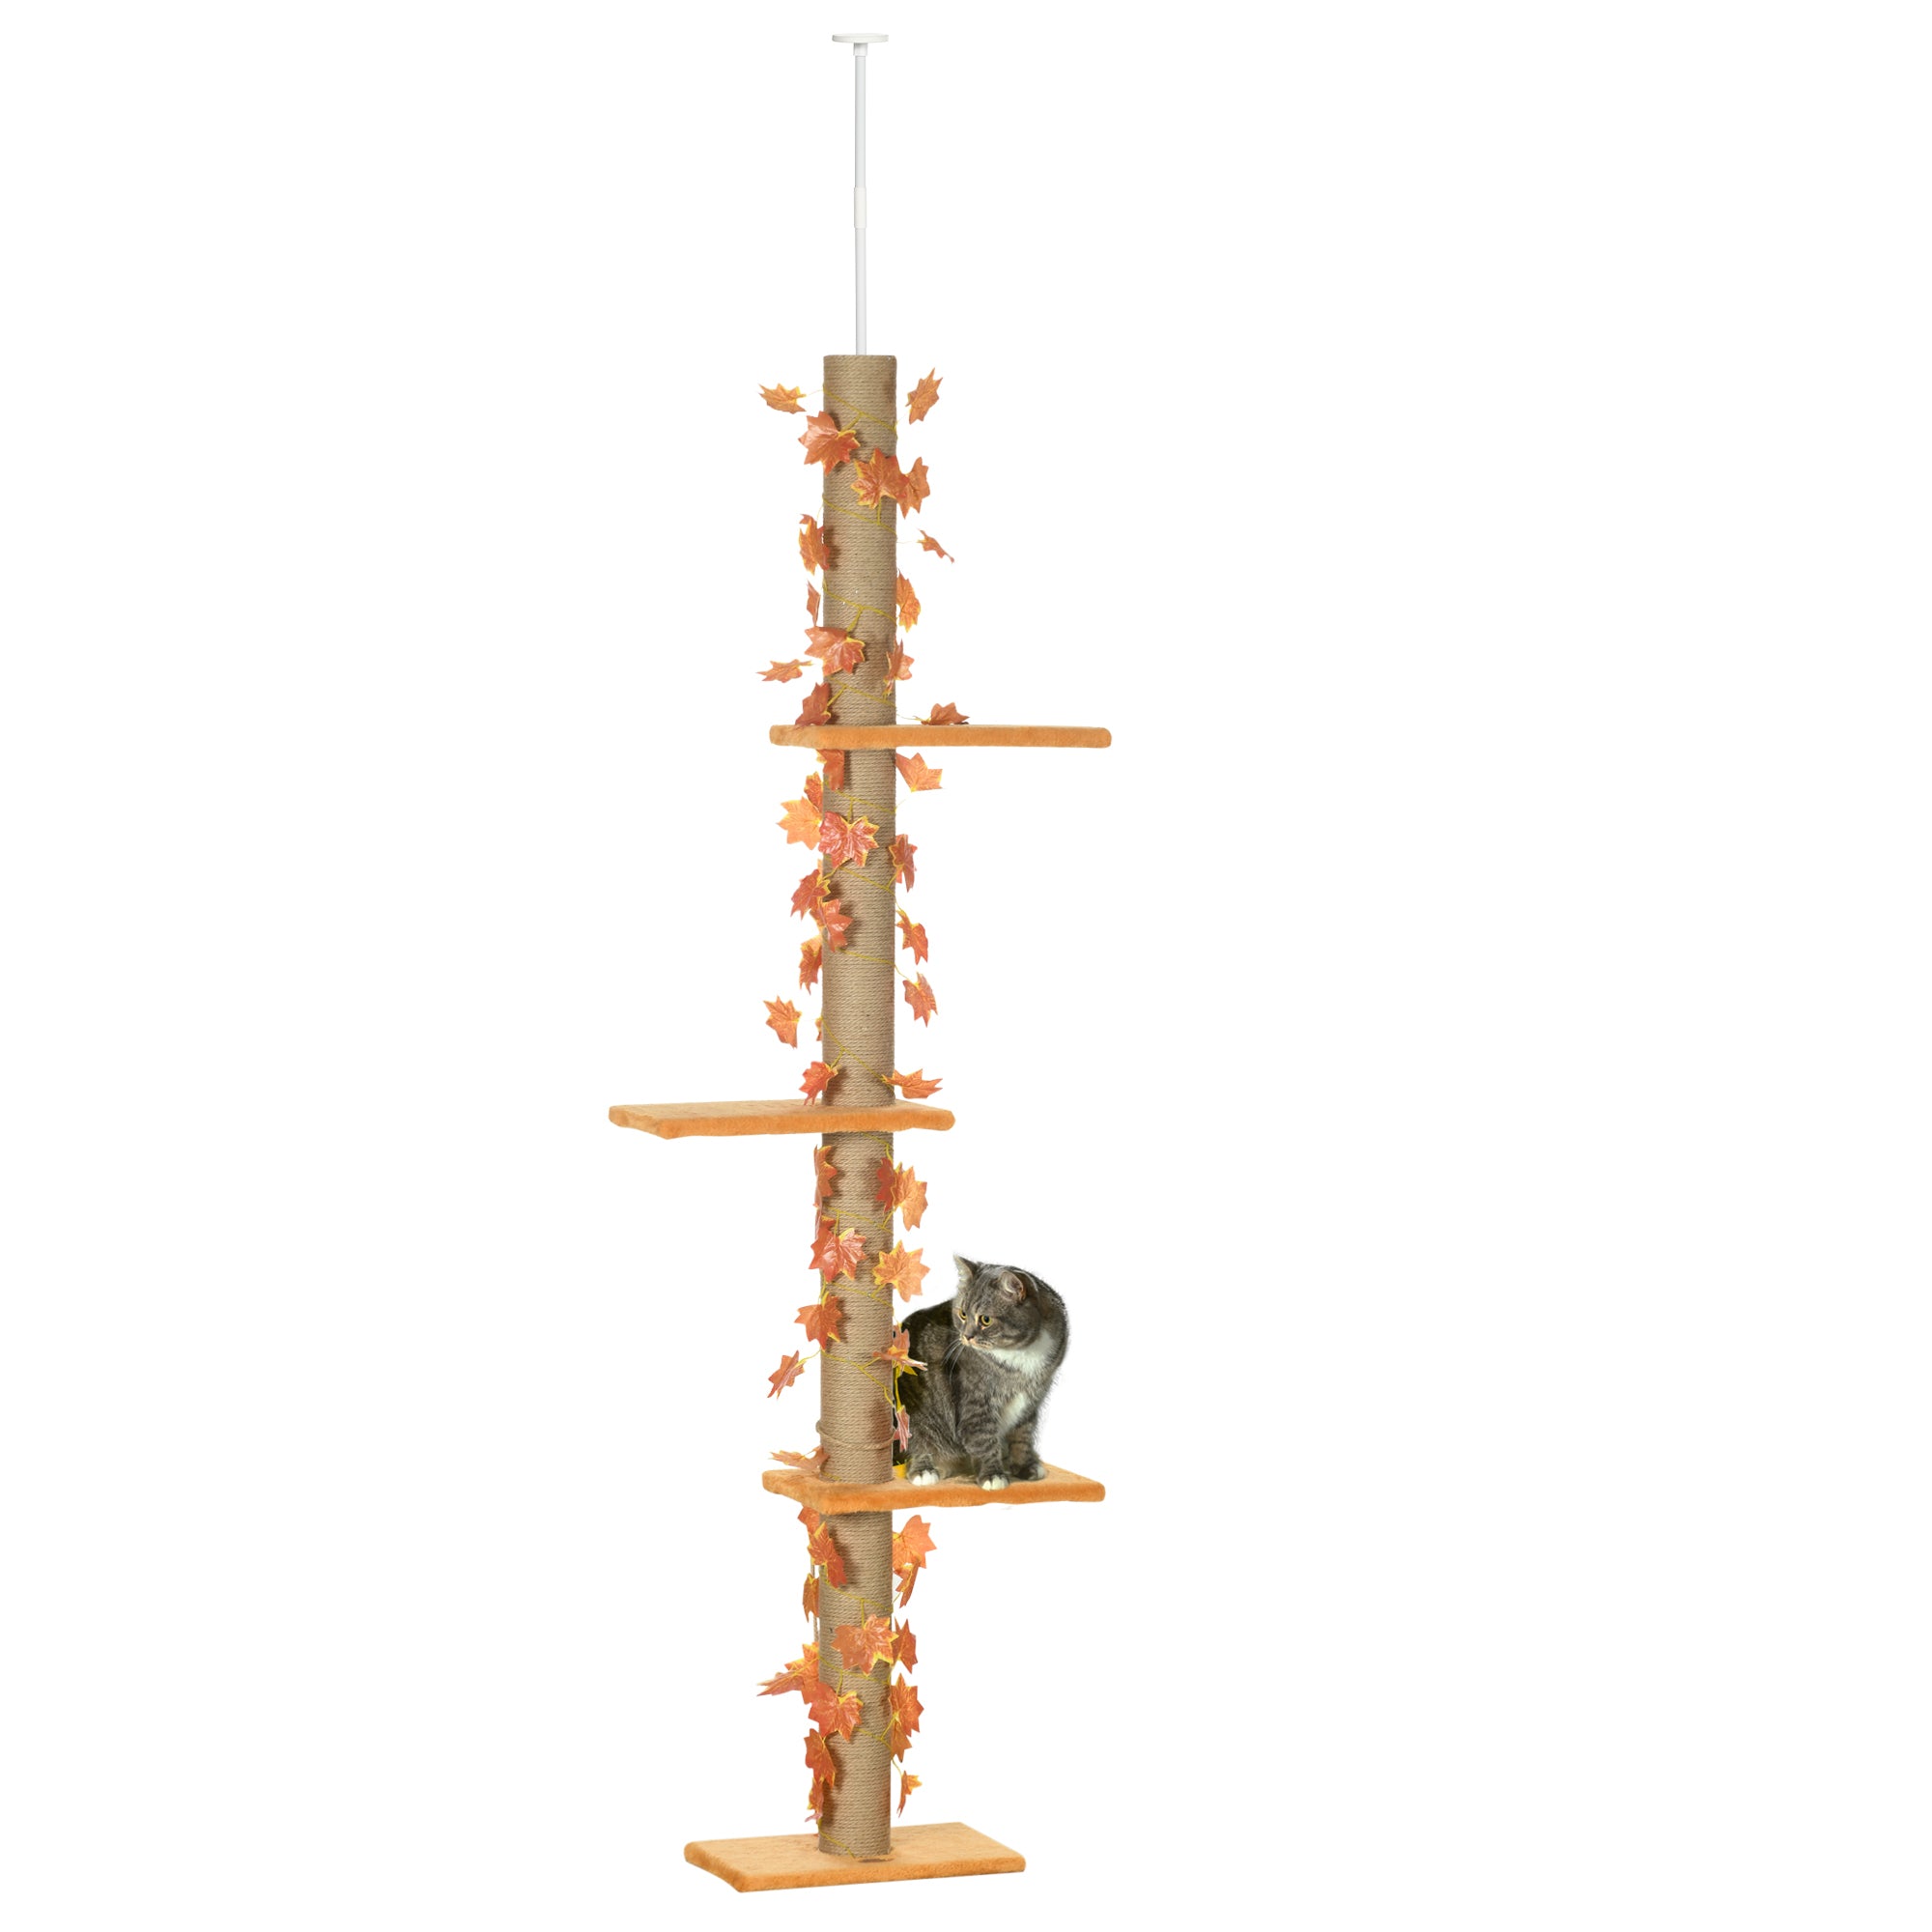 Pawhut Floor to Ceiling Cat Tree, 80" 95" Adjustable orange-particle board